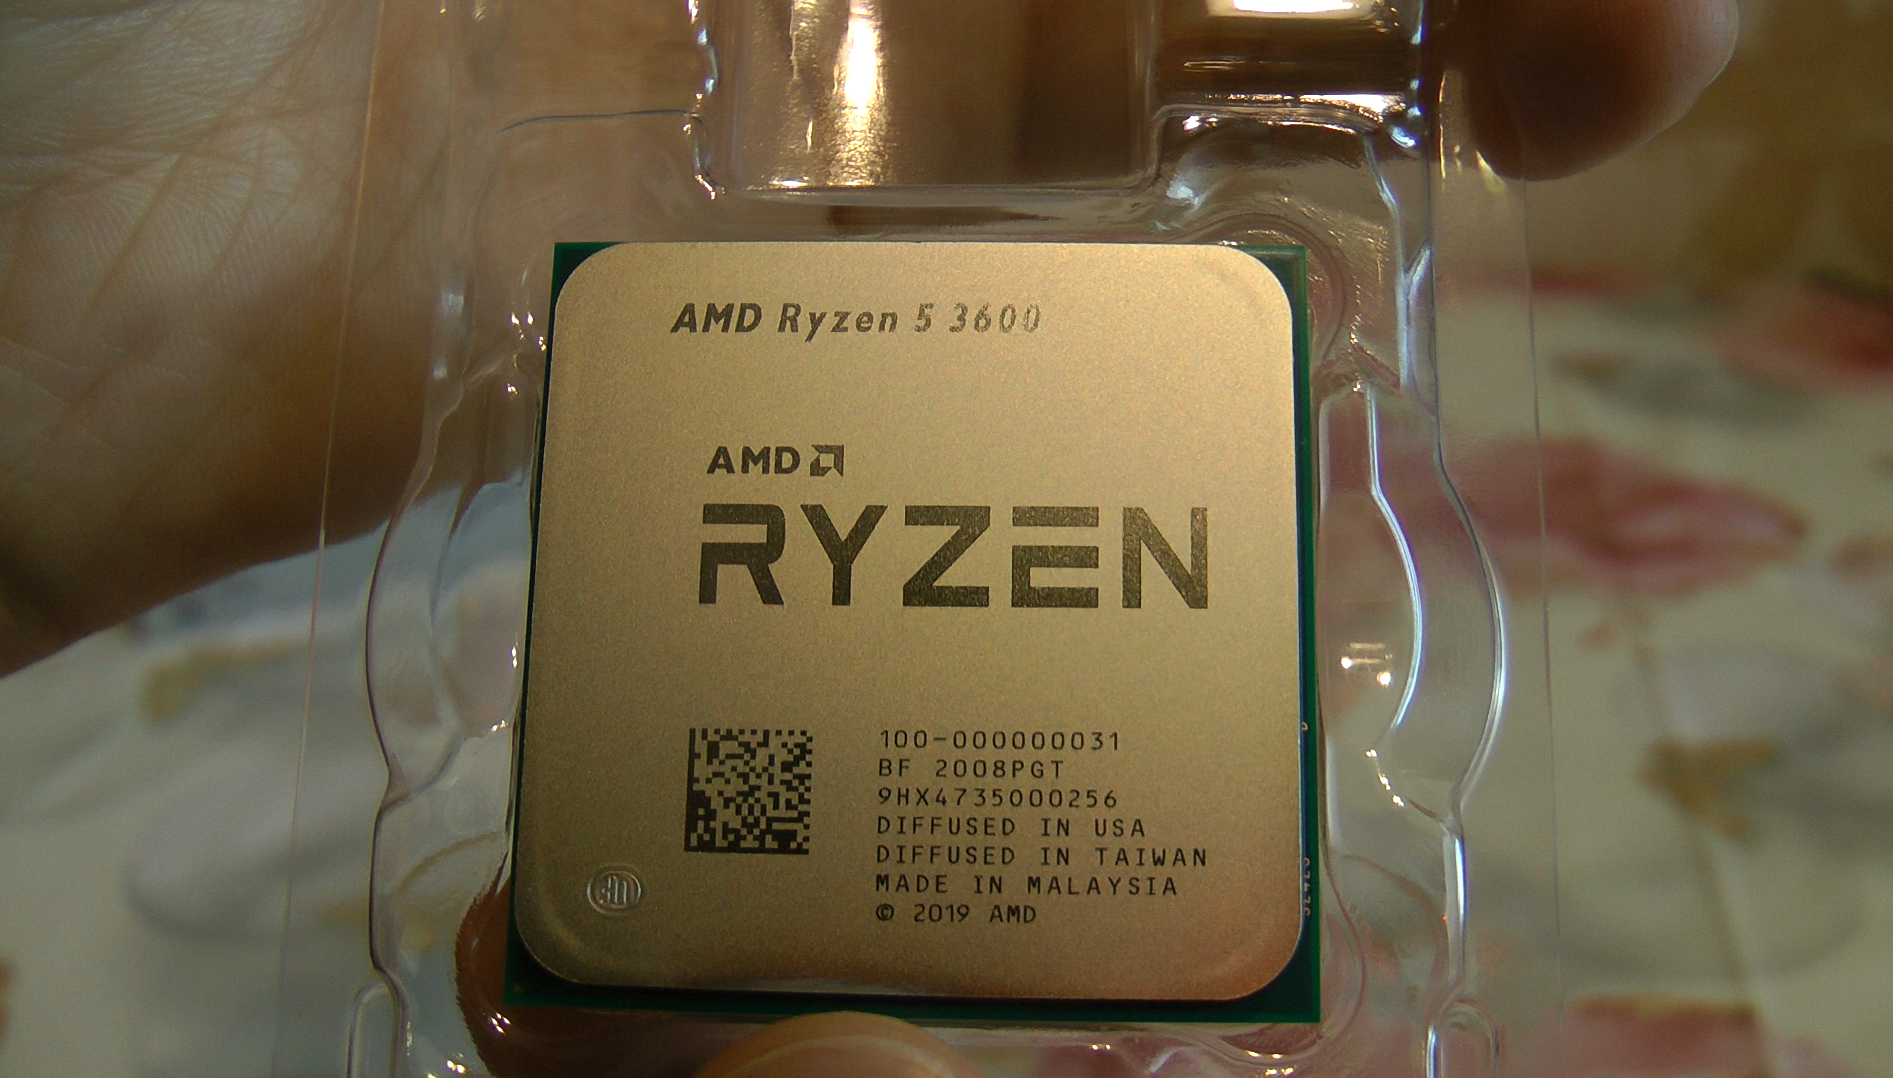 Ryzen 5 3600g. AMD Ryzen 5 3600. Процессор AMD Ryazan 5 3600 OEM. Процессор AMD Ryzen 5 3600 am4 OEM. Процессор AMD Ryzen 5 3600x OEM am4 Matisse.